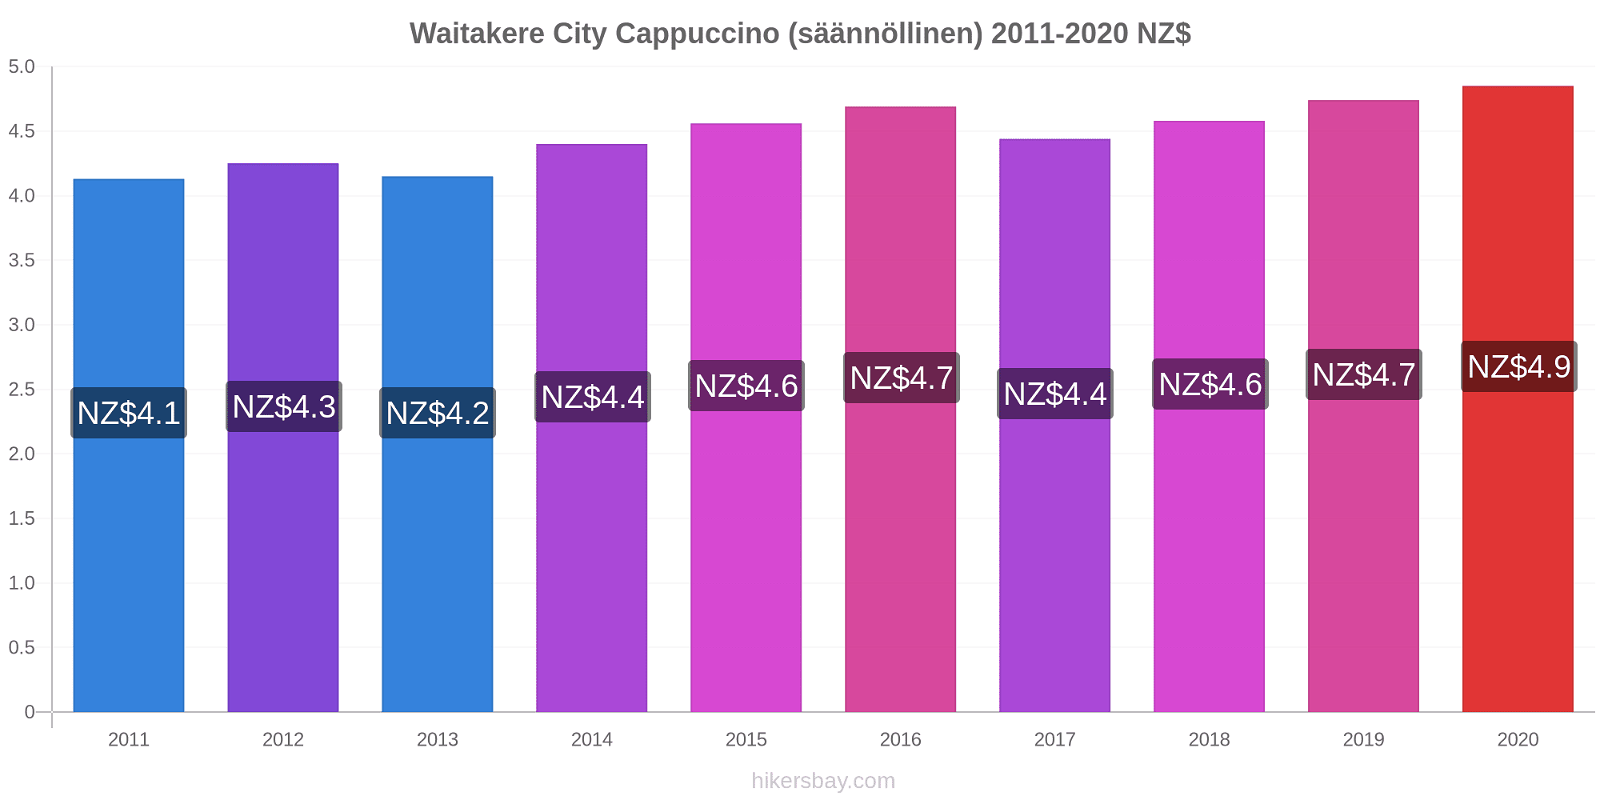 Waitakere City hintojen muutokset Cappuccino (säännöllinen) hikersbay.com